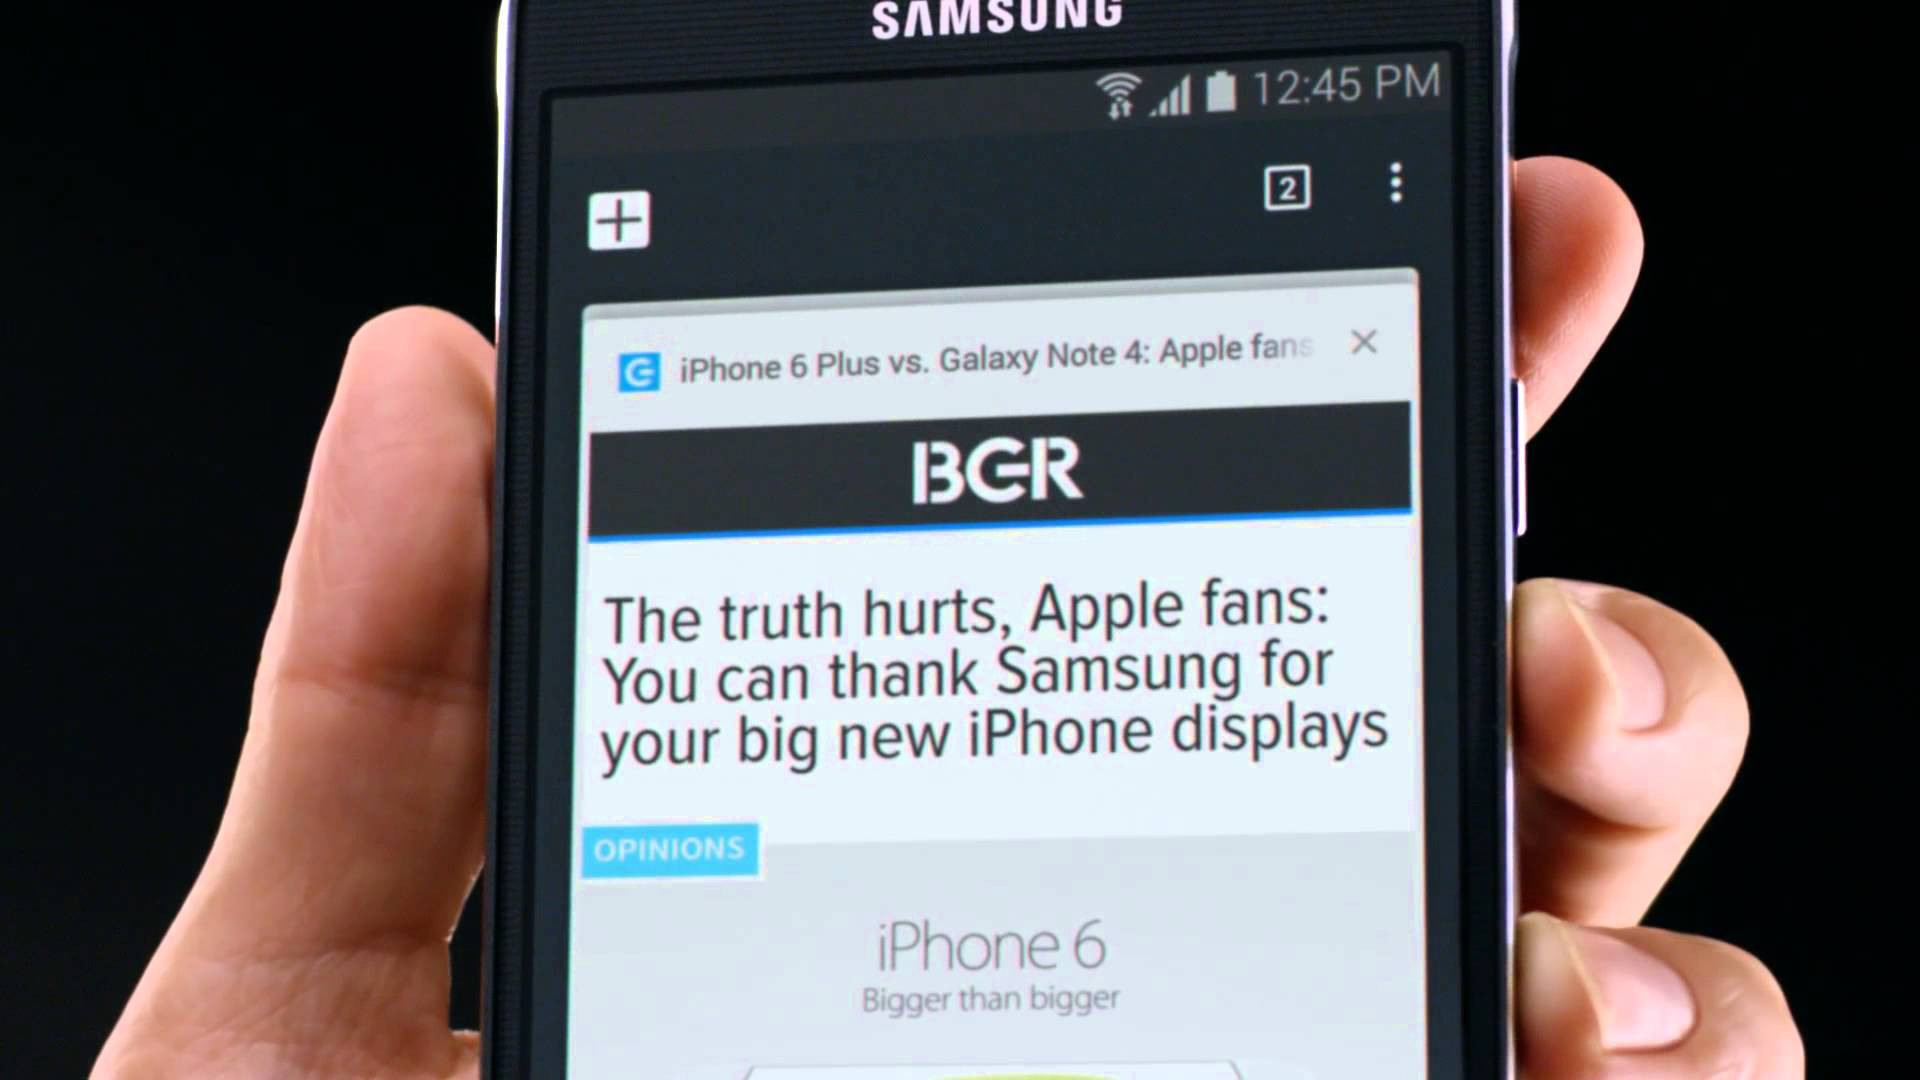 Samsung Werbung: Galaxy Note 4 vs. iPhone 6 Plus 1